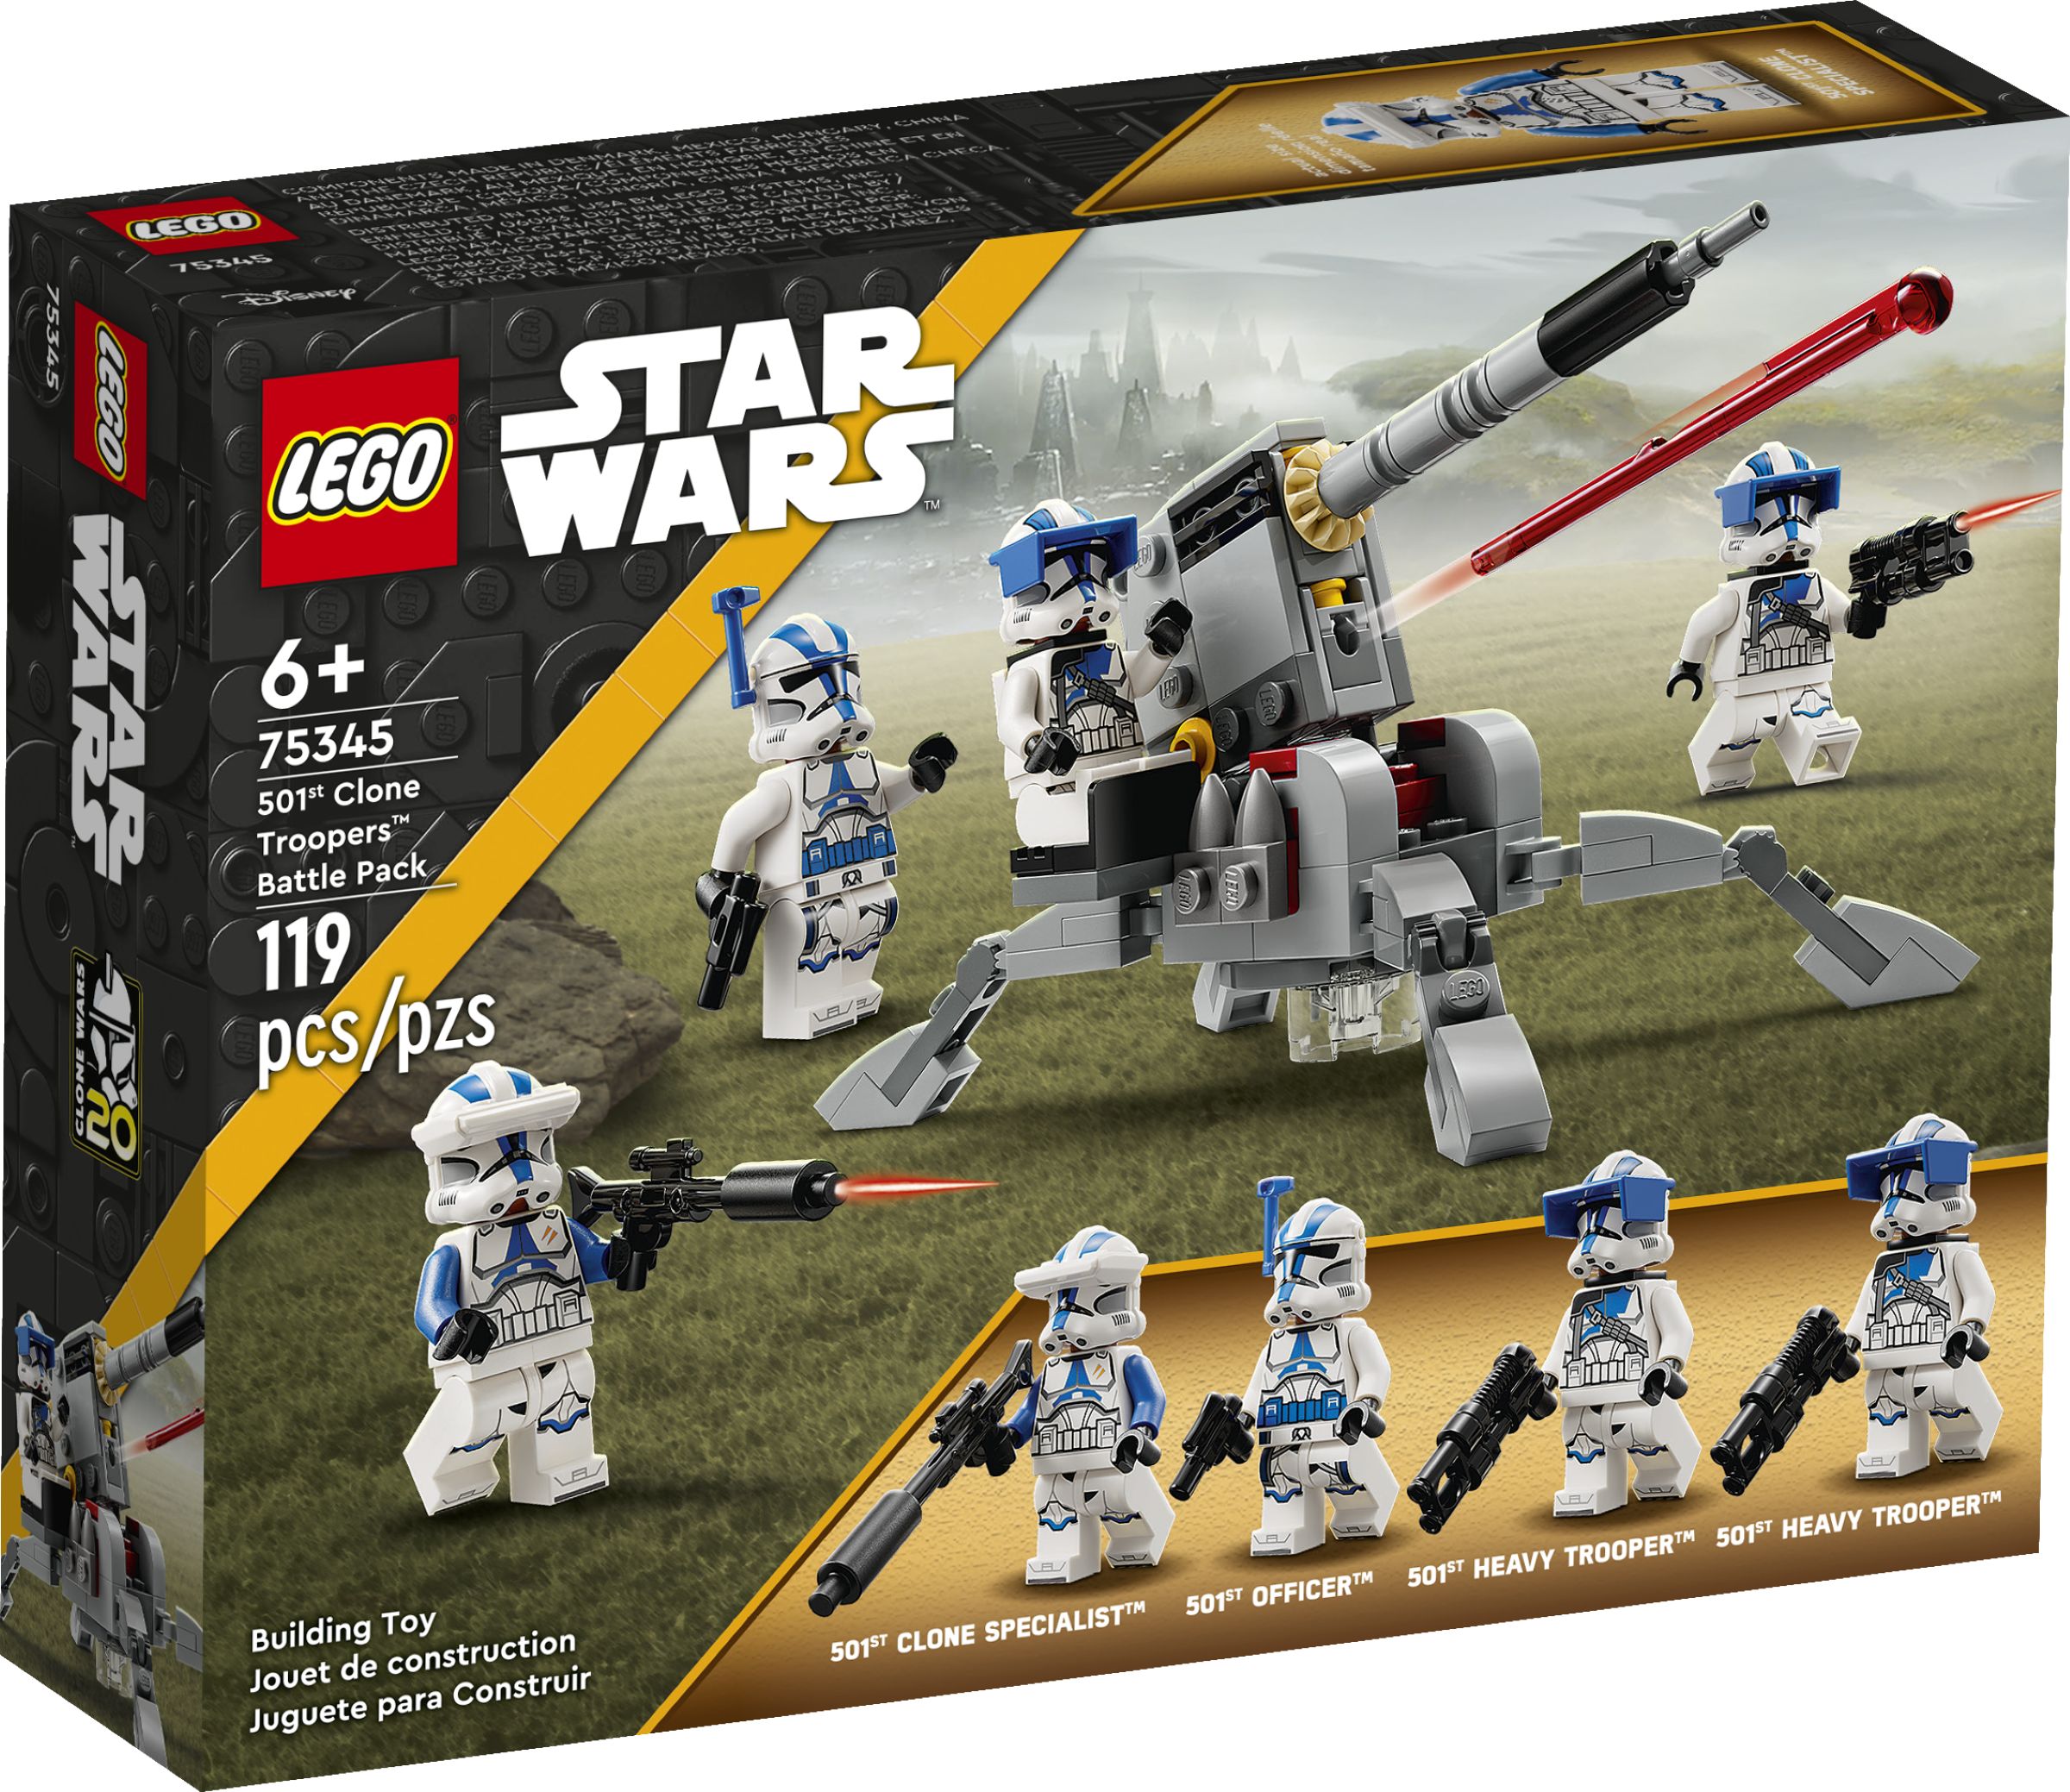 LEGO Star Wars 75345 501st Clone Troopers™ Battle Pack LEGO_75345_alt1.jpg